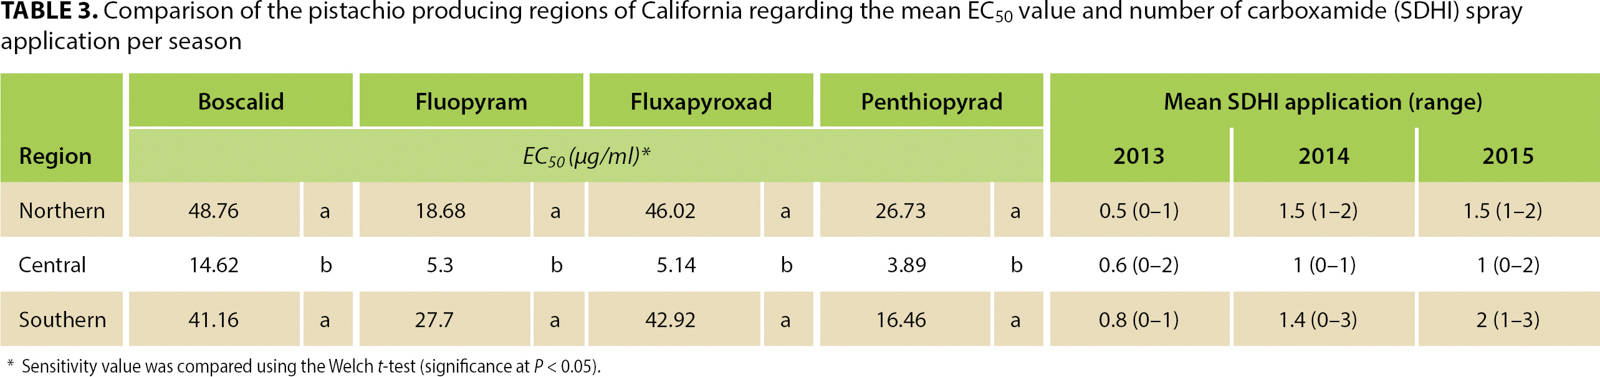 Comparison of the pistachio producing regions of California regarding the mean EC50 value and number of carboxamide (SDHI) spray application per season